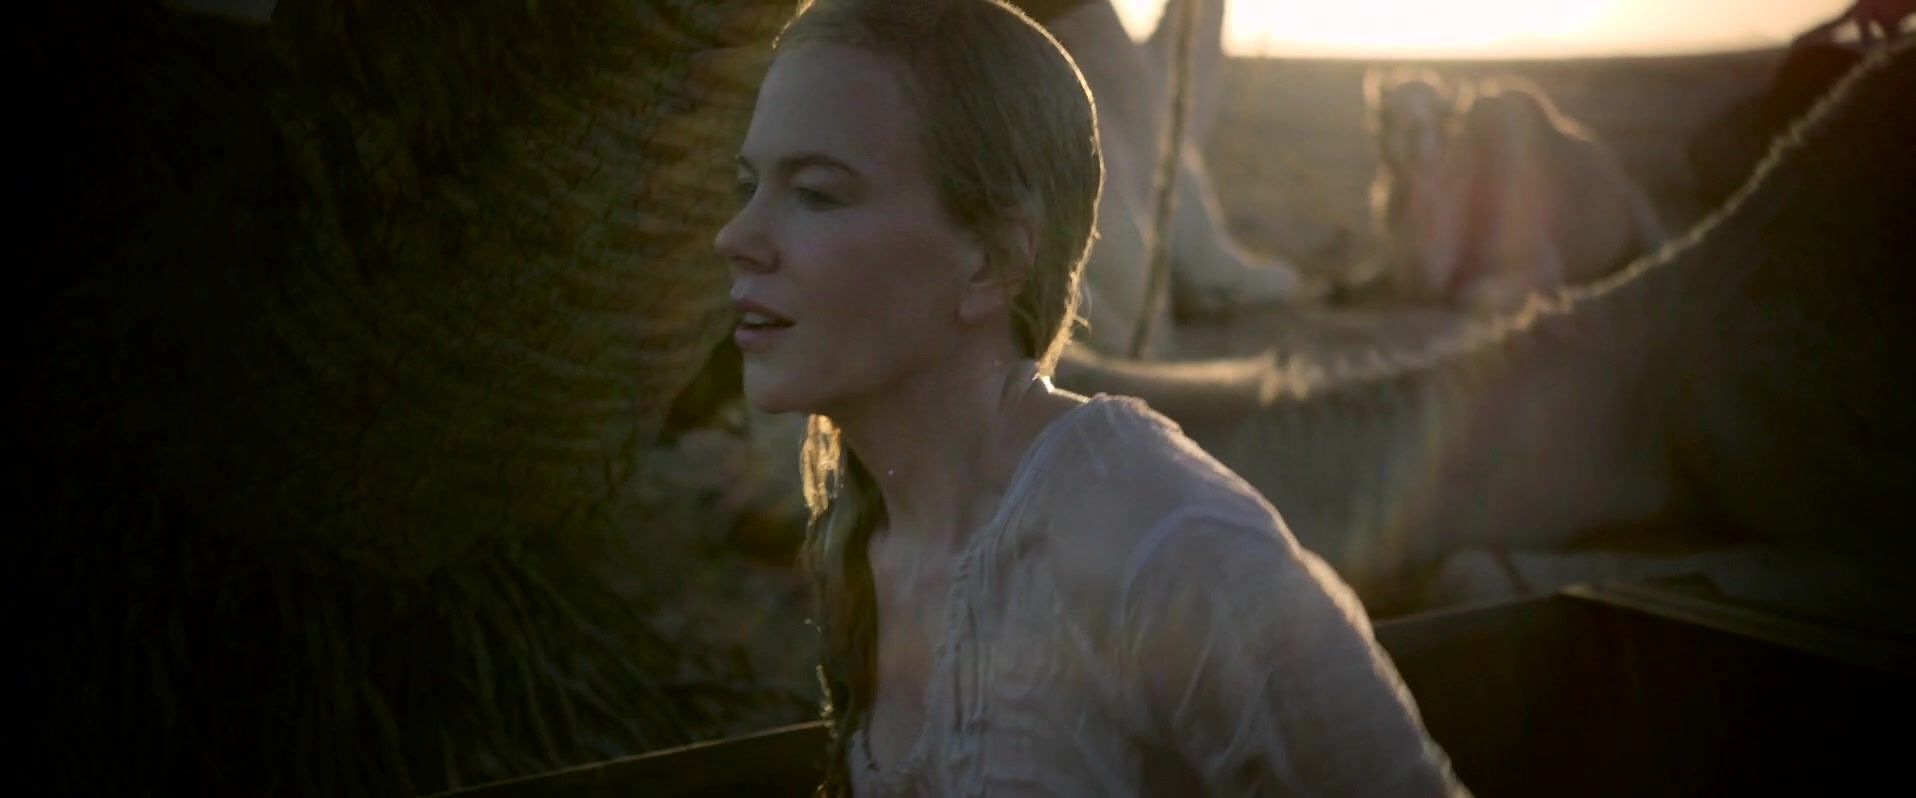 Pov Sex Nicole Kidman nude - Queen of the Desert (2016) Wanking